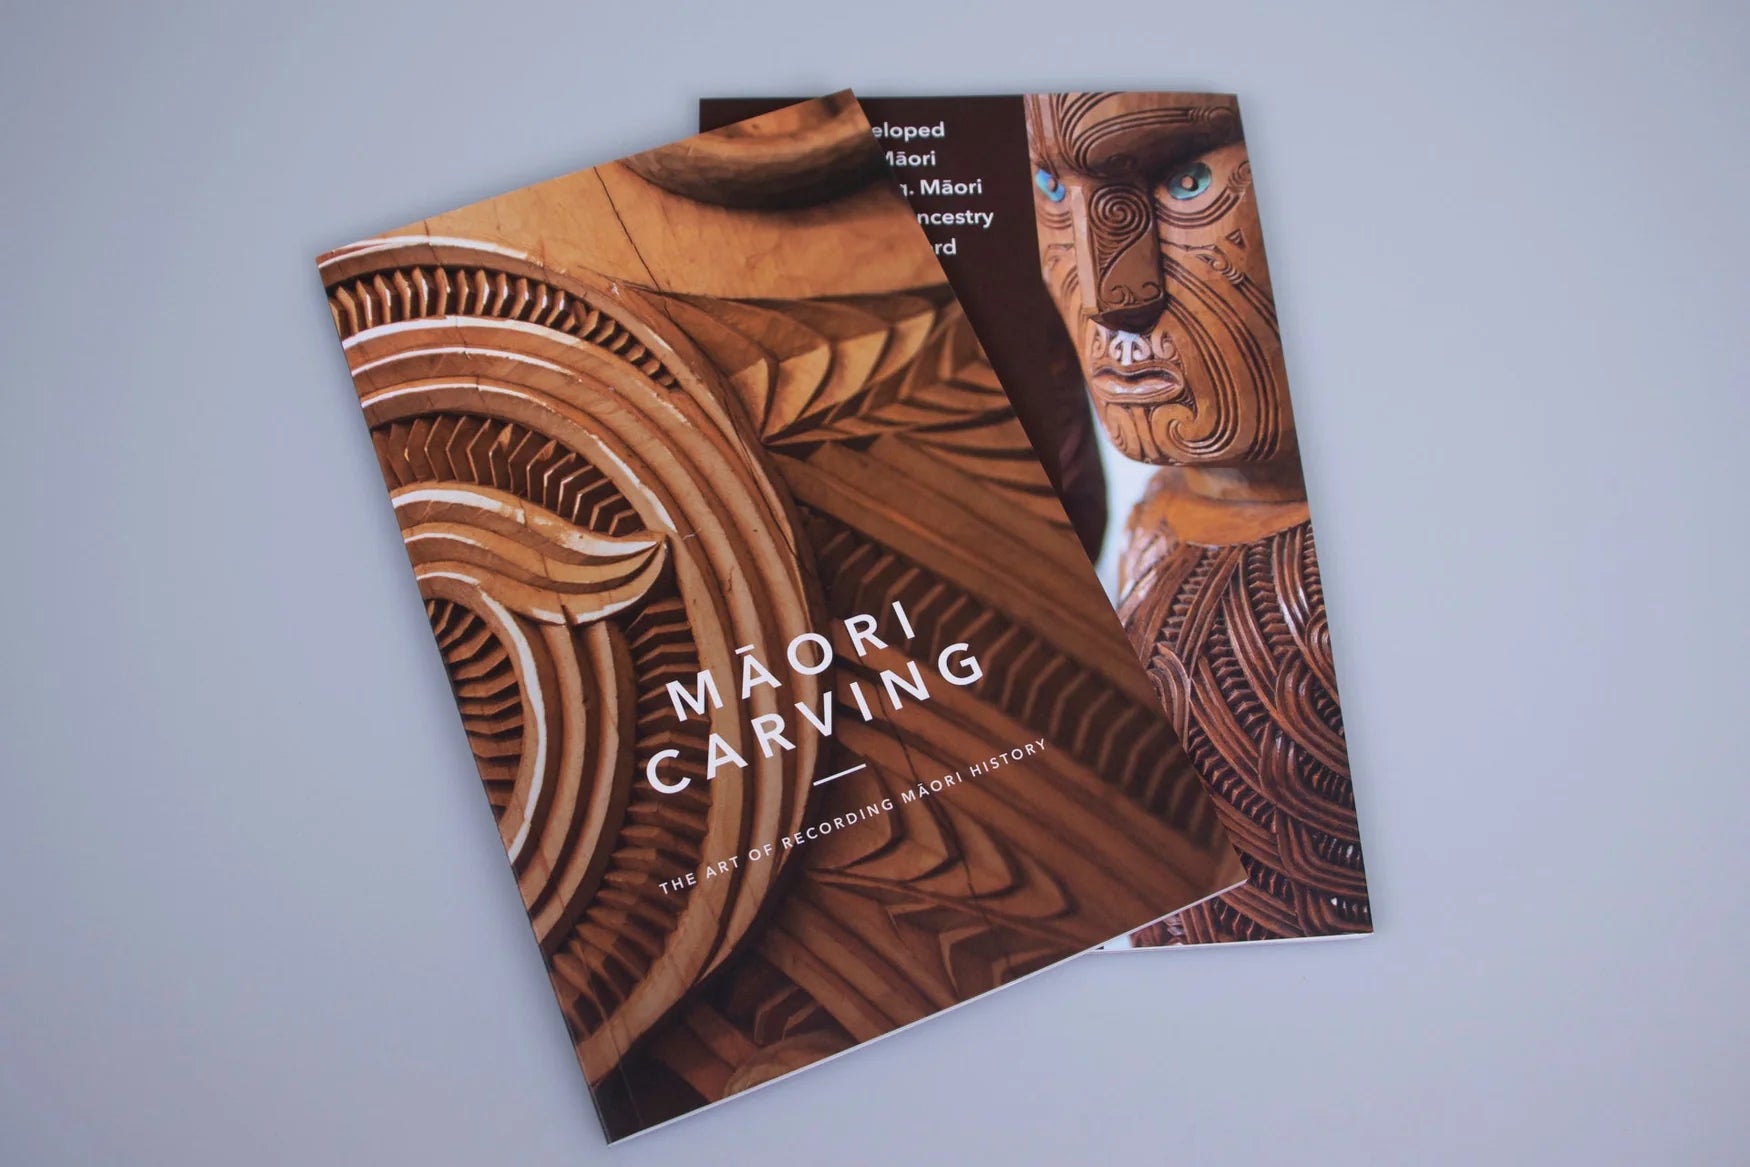 Māori Carving: The Art of Recording Māori History from Ngā Kete Iho & Huia Publishers